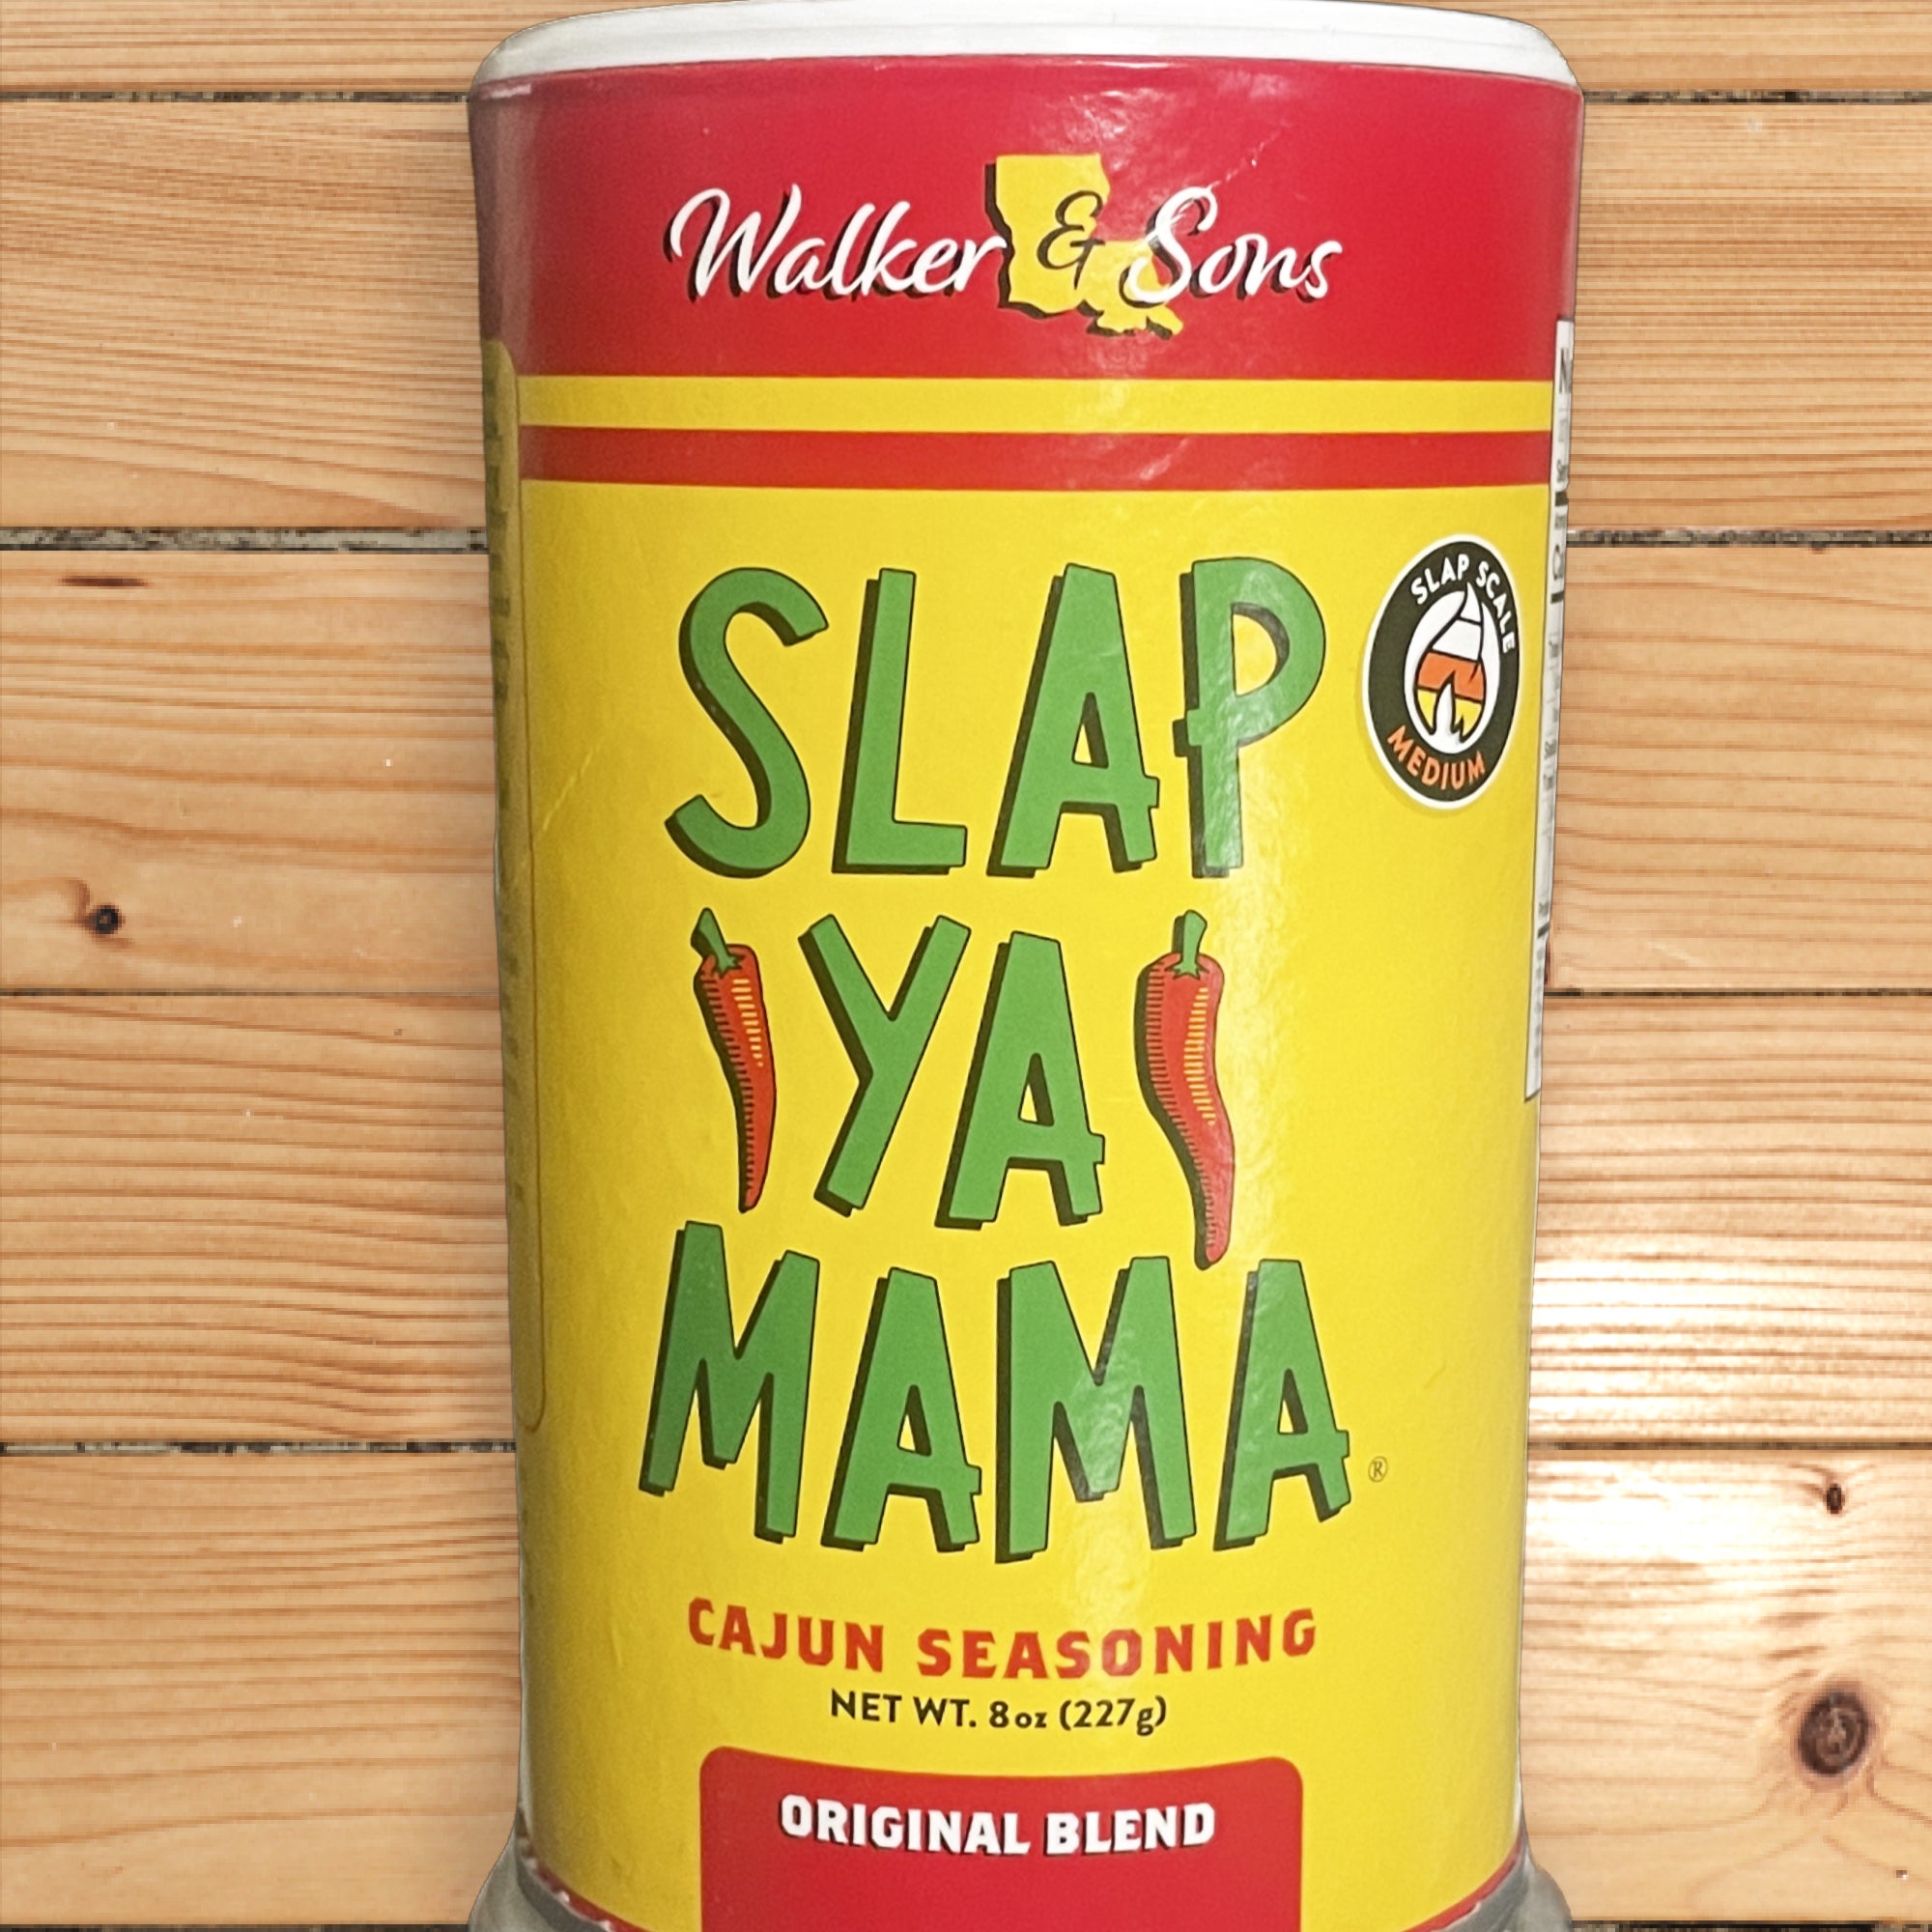  Slap Ya Mama Cajun Seasoning from Louisiana, Spice